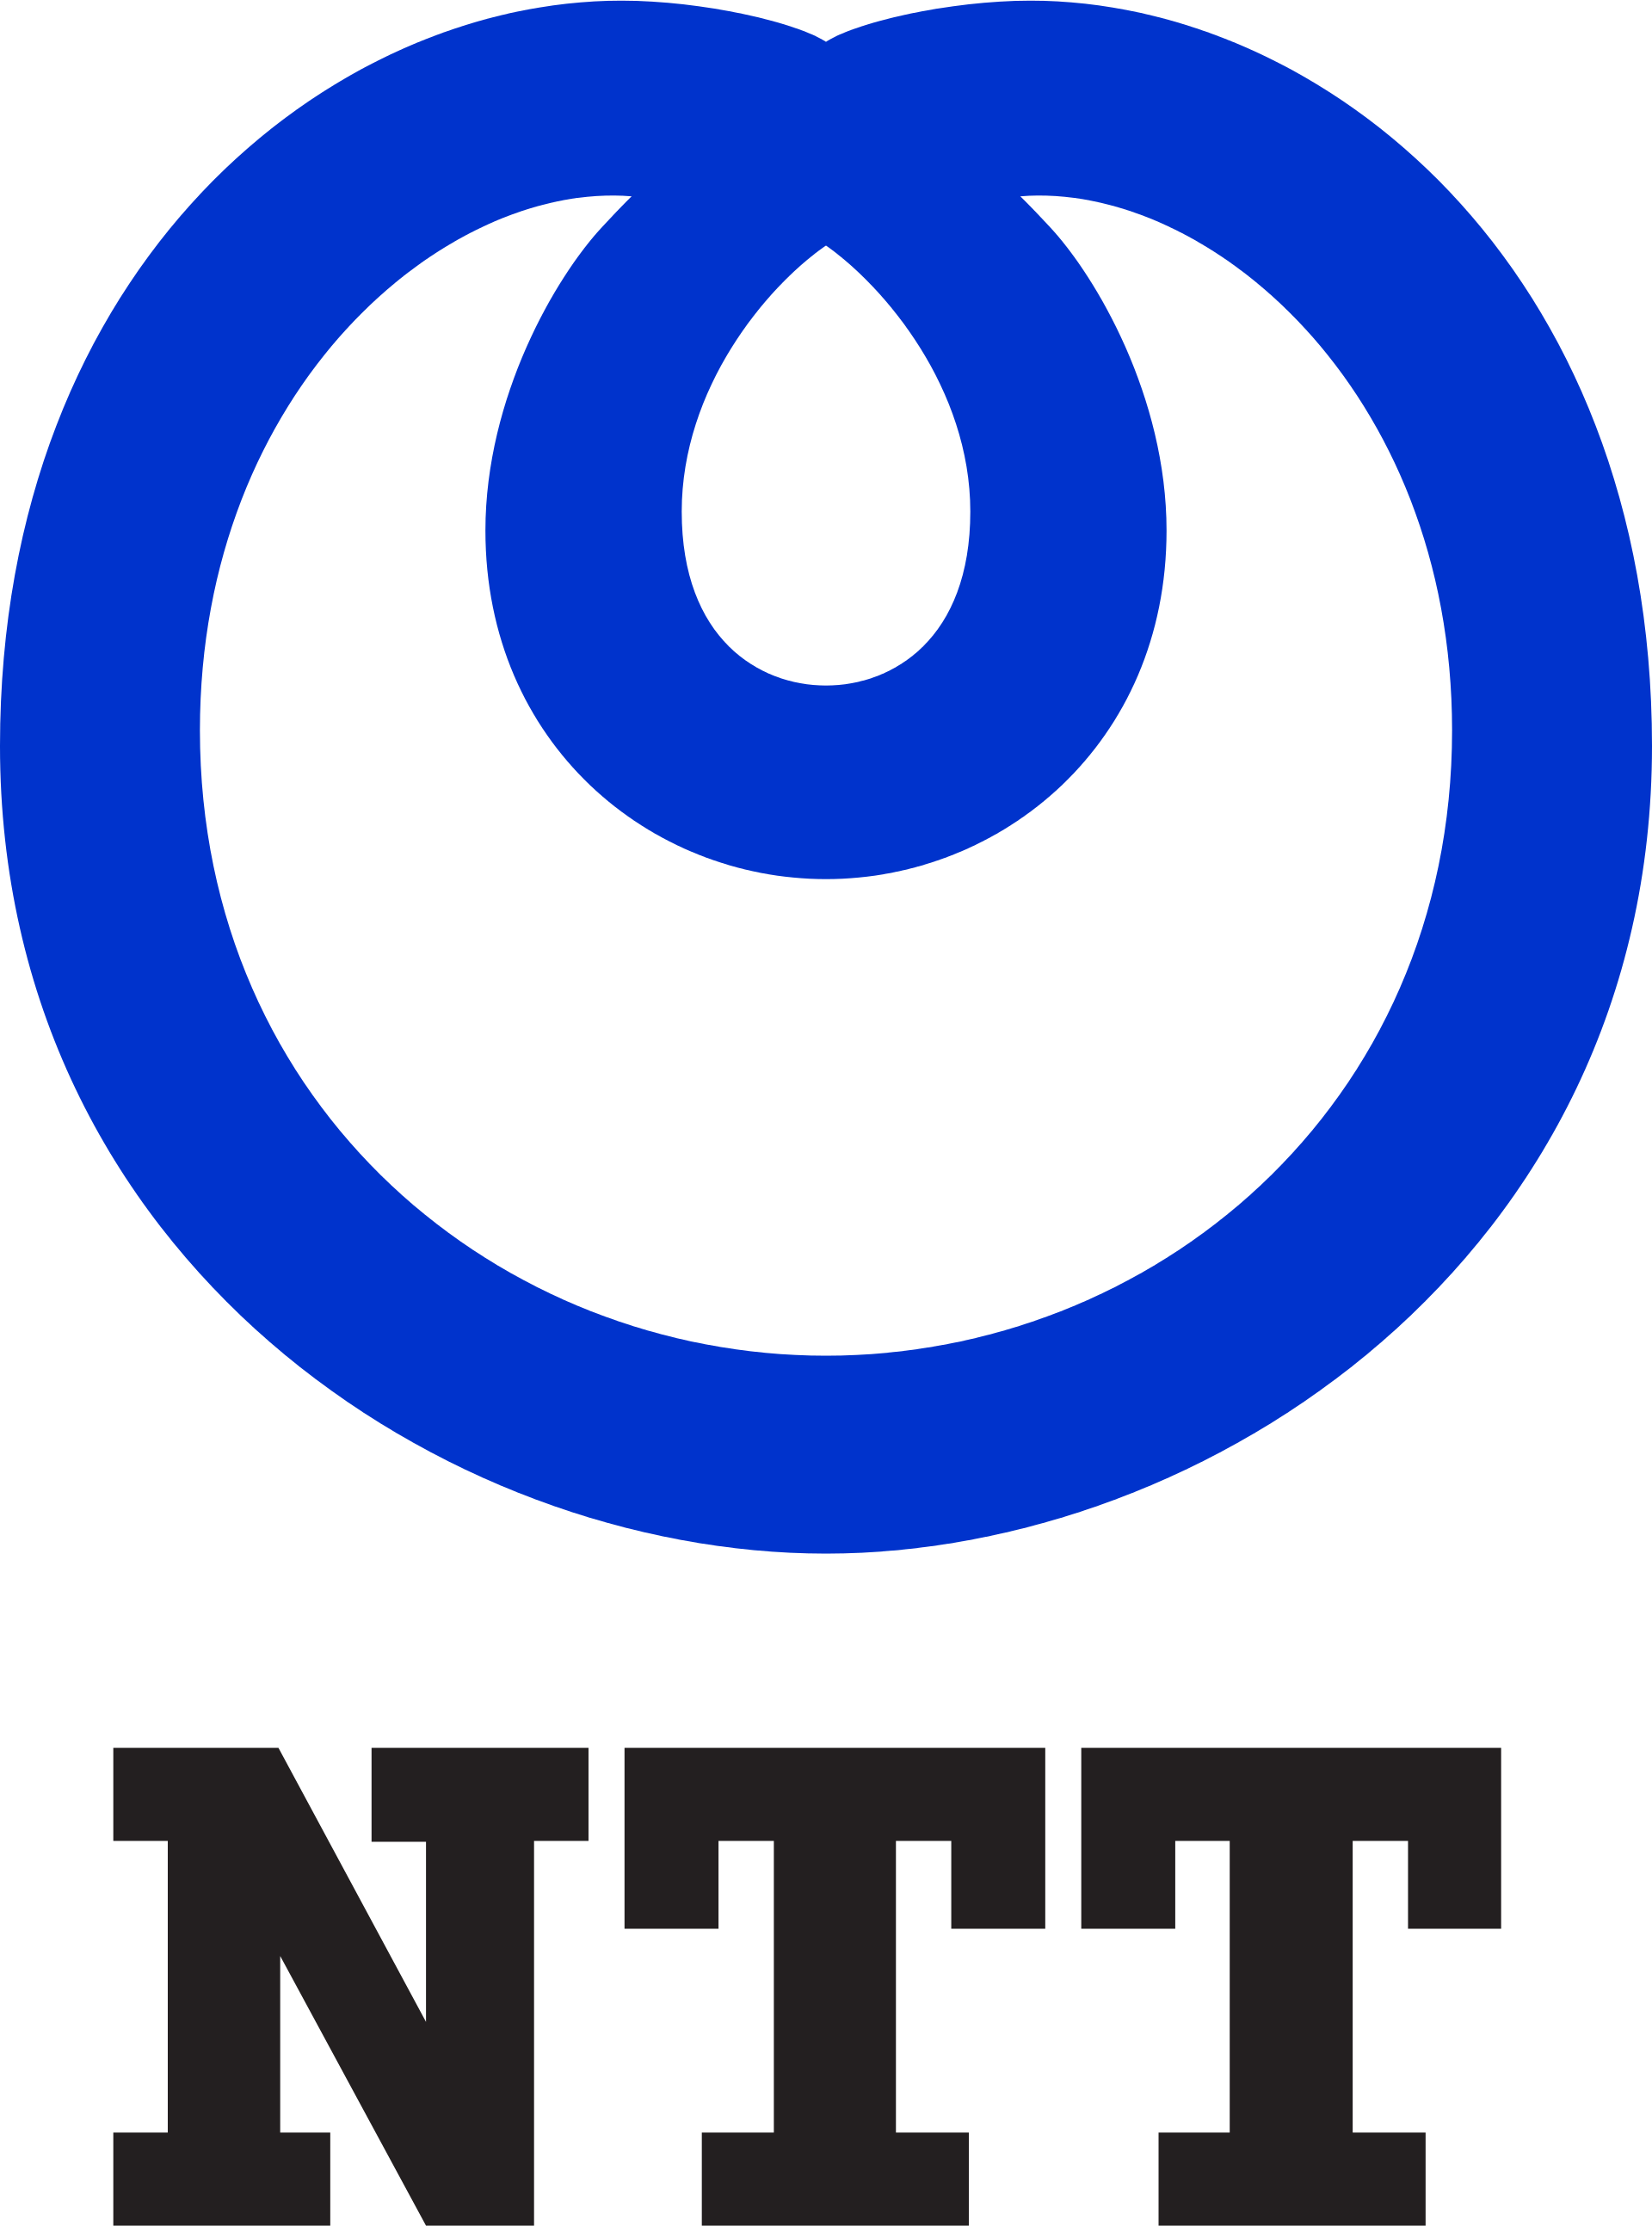 NTT - Wikipedia, la enciclopedia libre